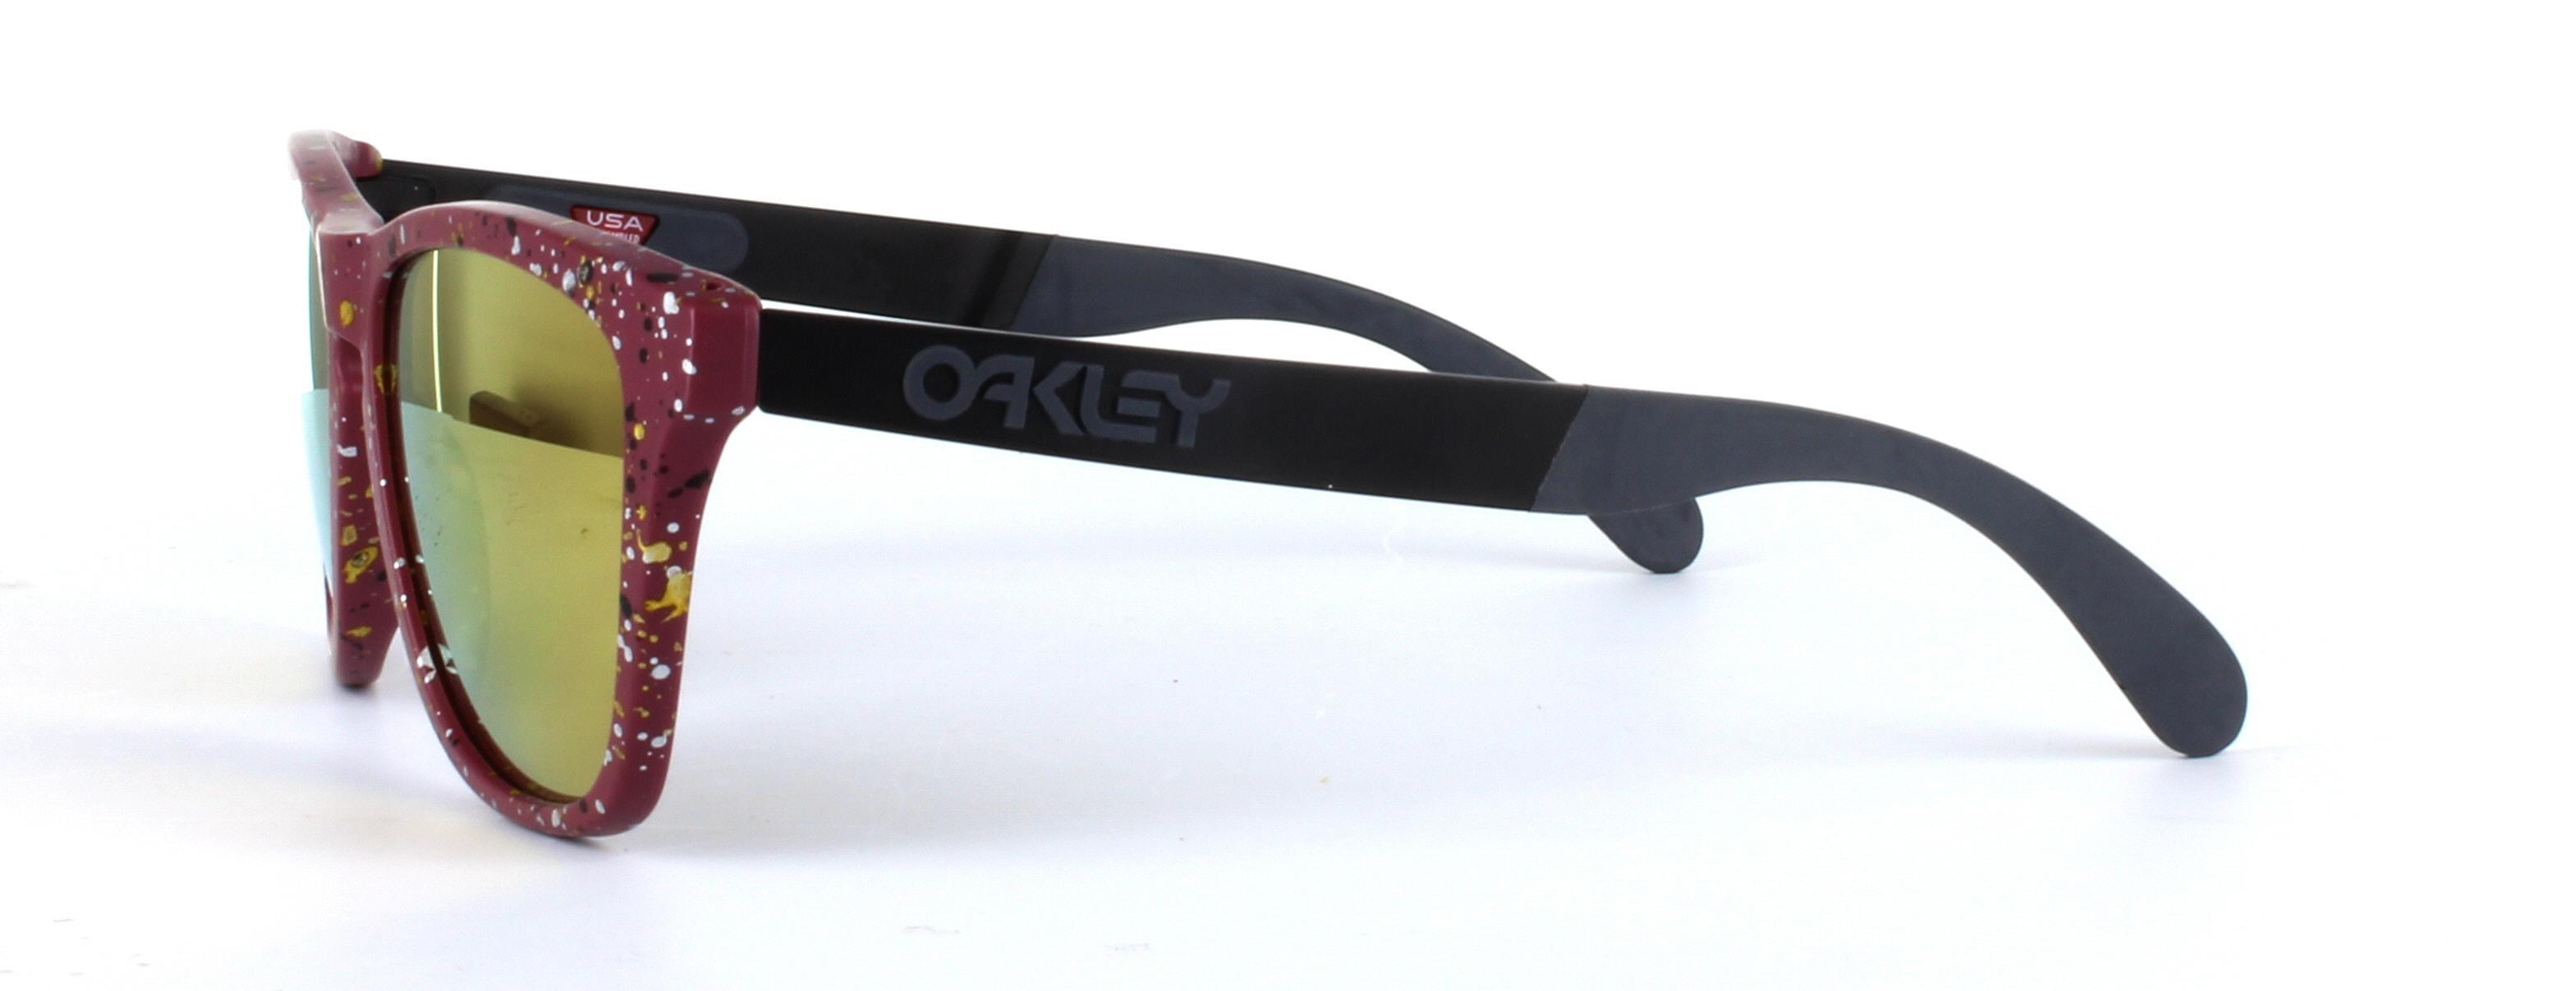 Oakley (O9428) Red Full Rim Rectangular Plastic Sunglasses - Image View 2